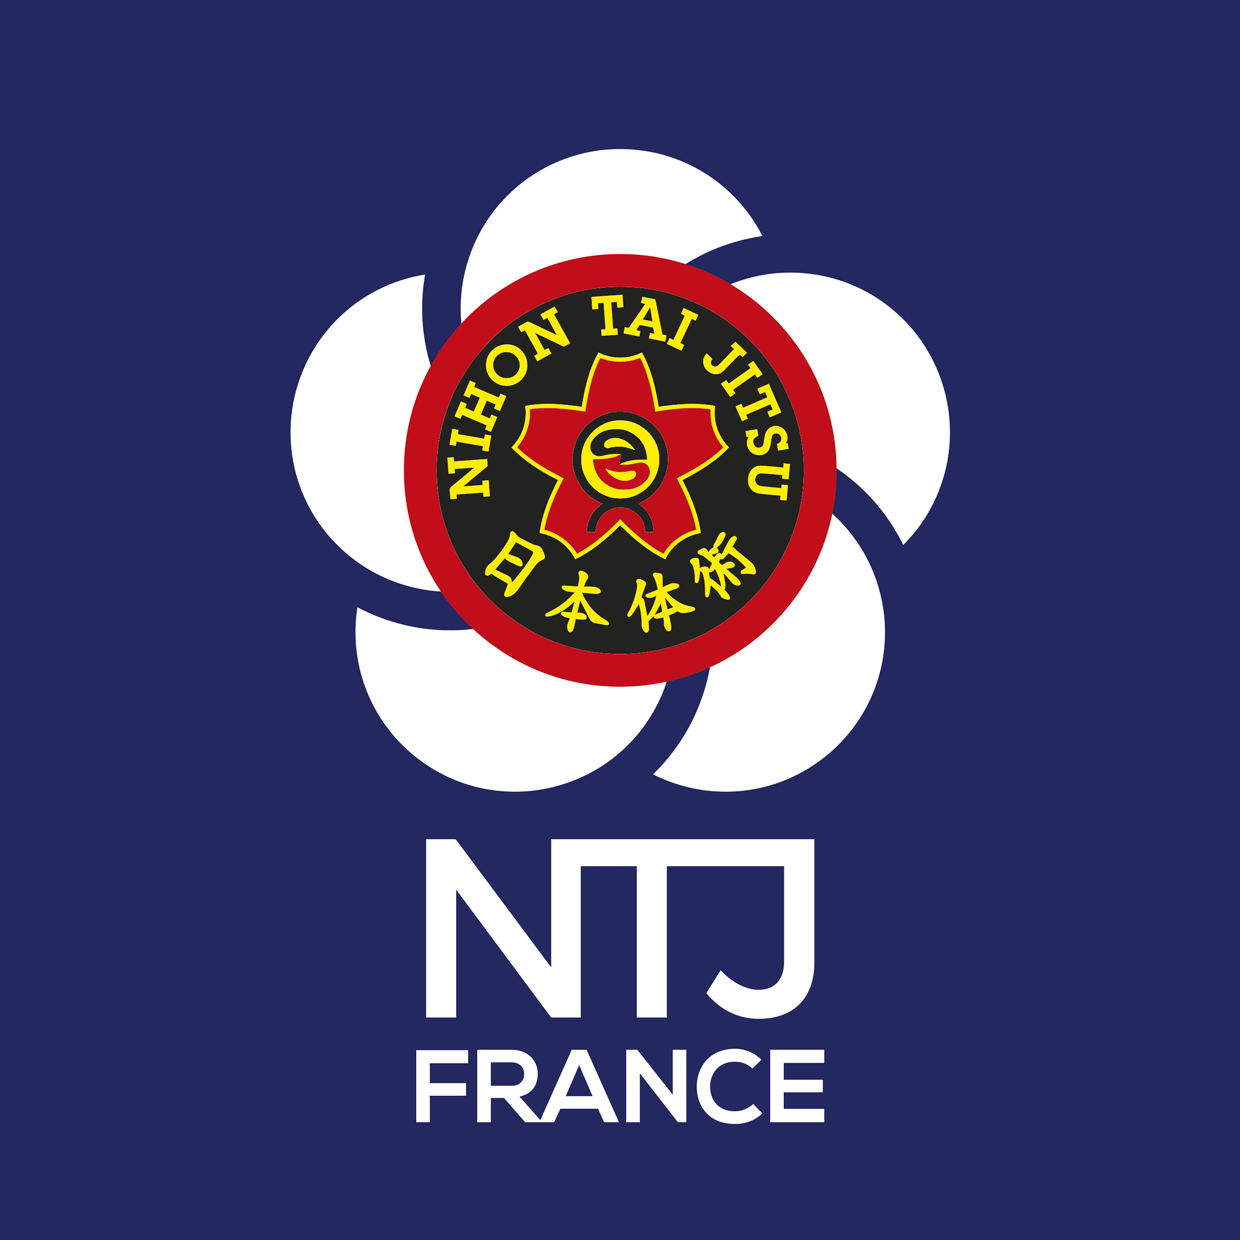 NTJ FRANCE logo rvb